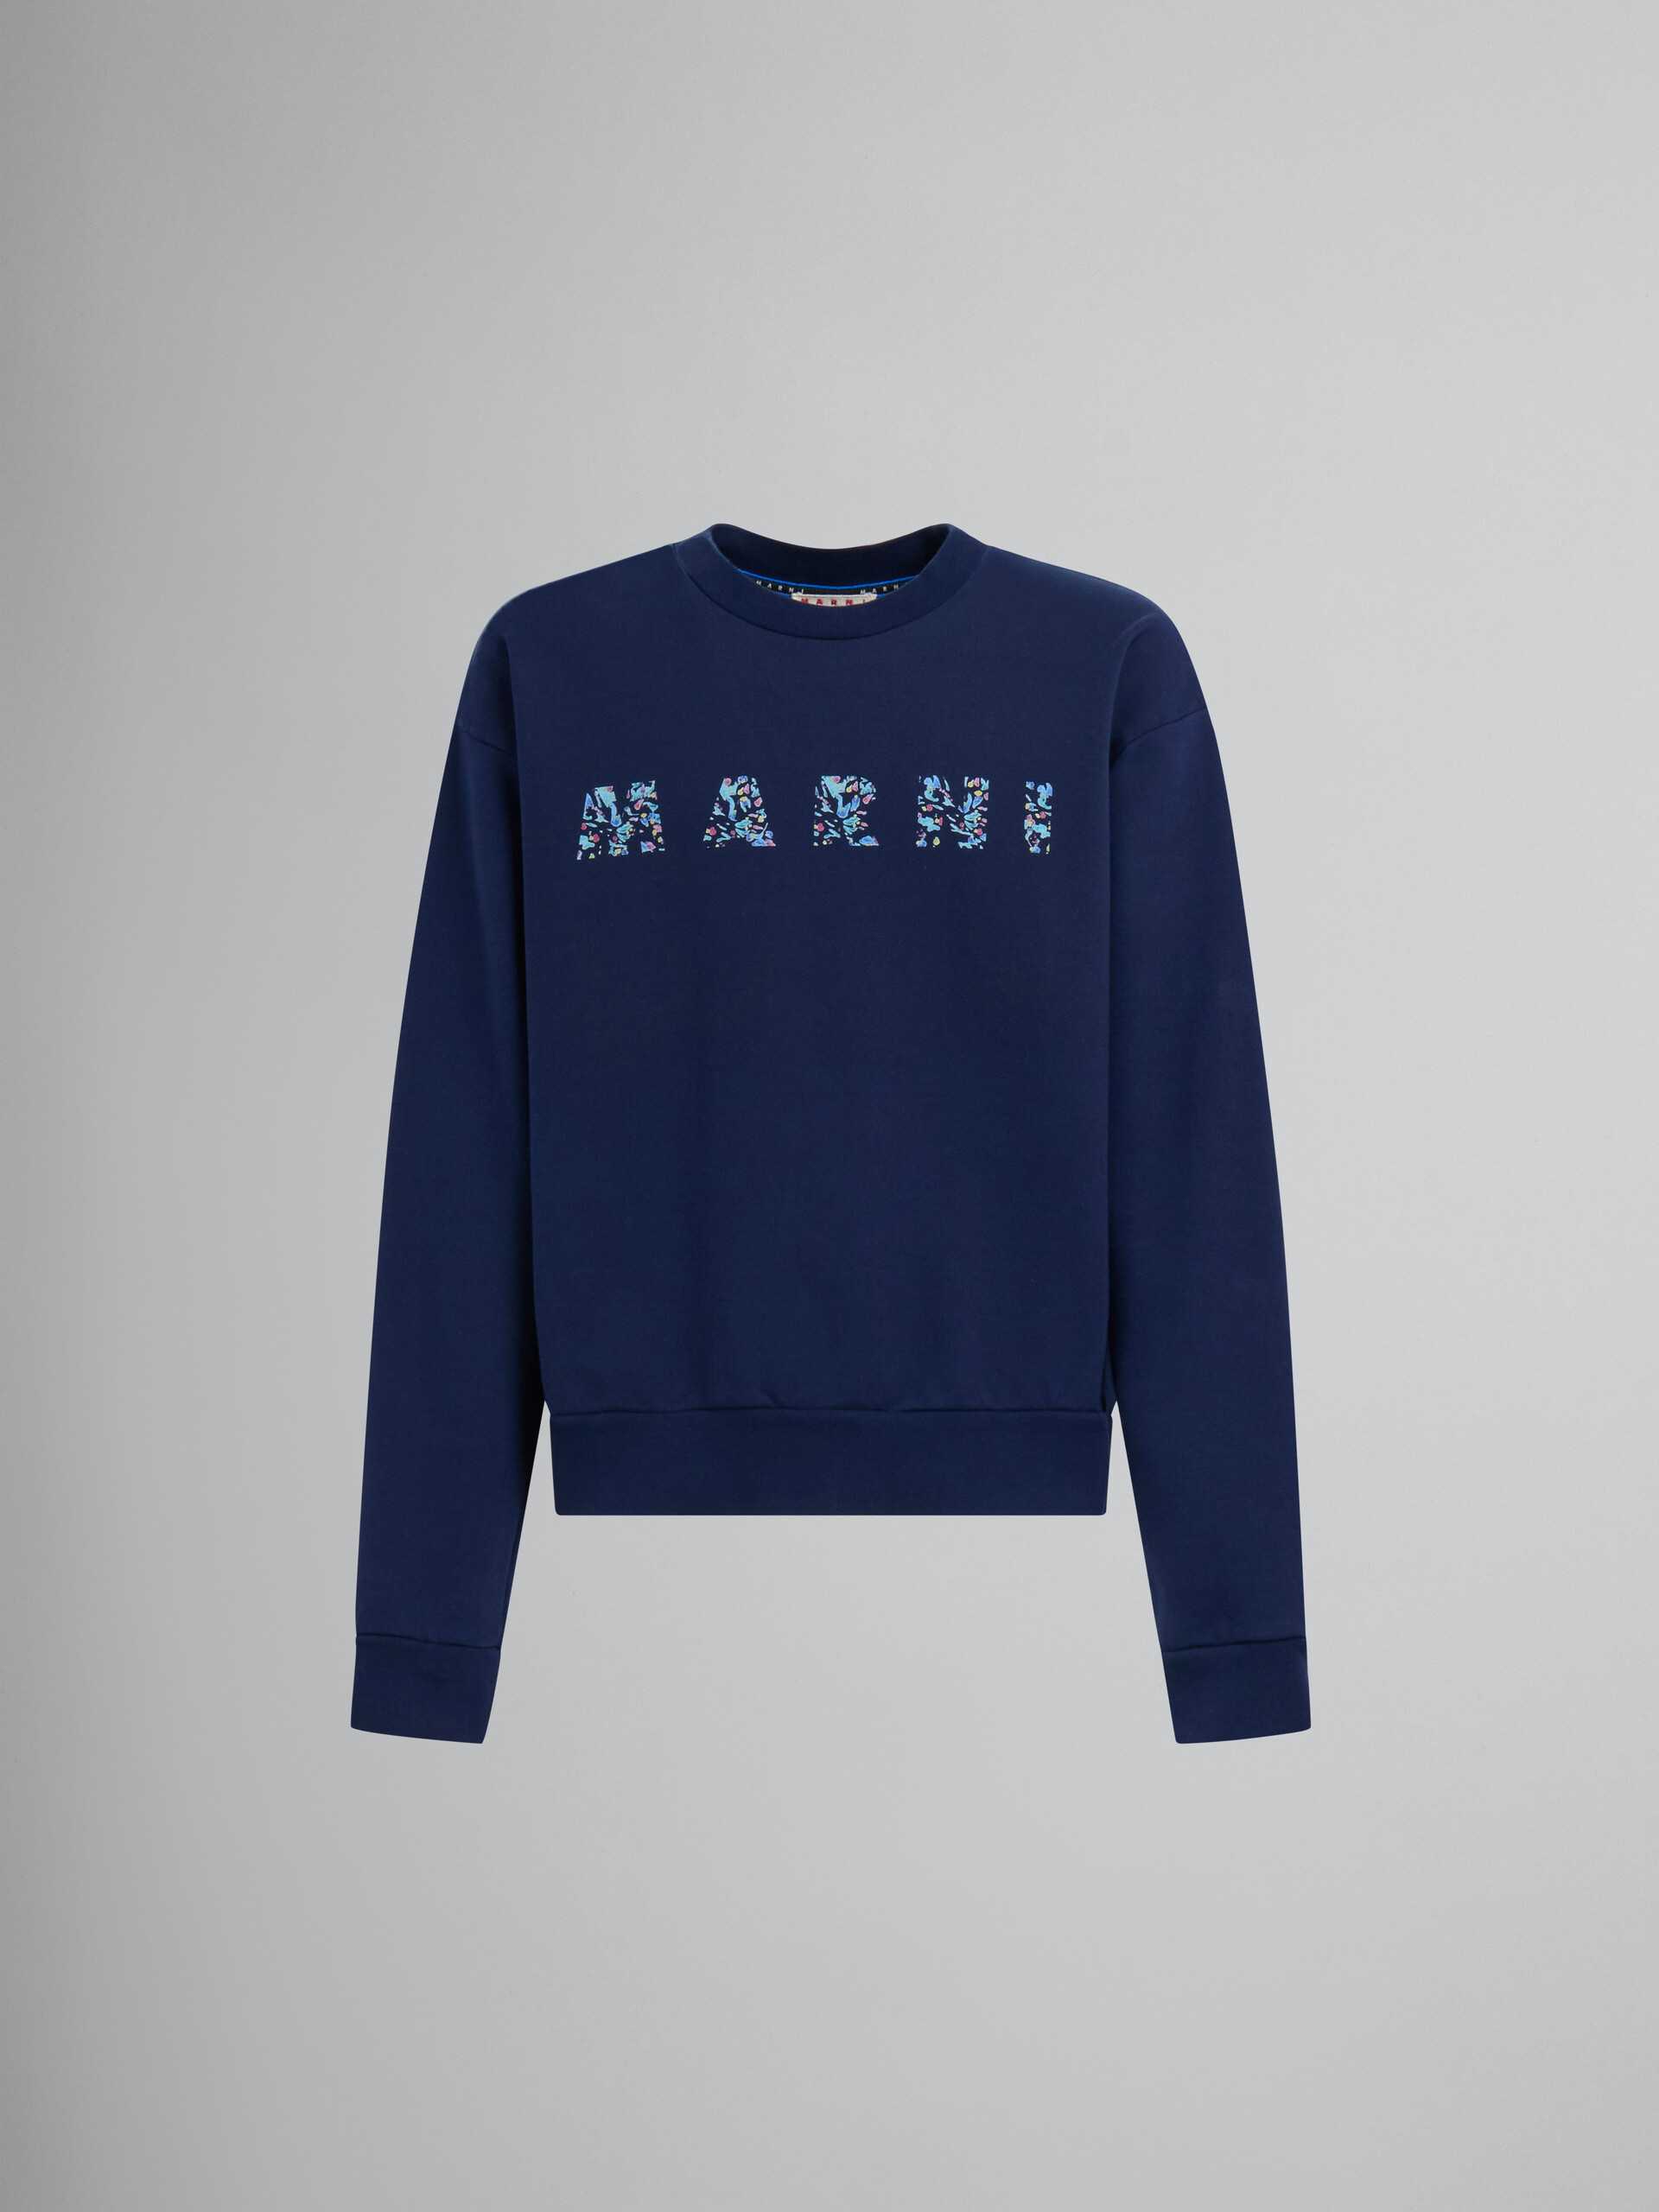 Blue bio cotton sweatshirt with patterned Marni print - Sweaters - Image 1